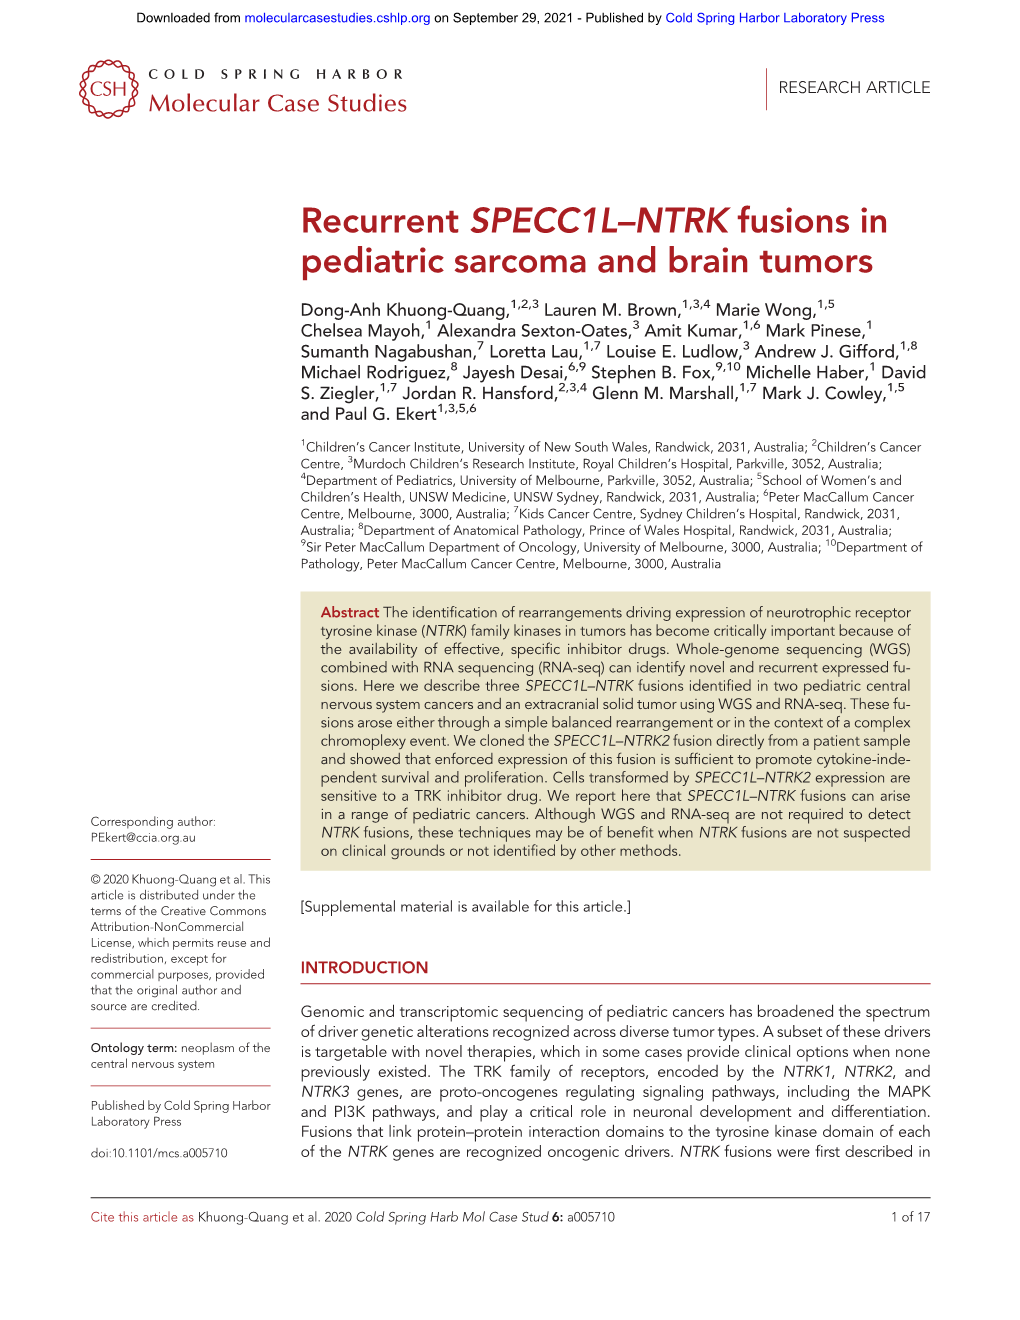 Recurrent SPECC1L–NTRK Fusions in Pediatric Sarcoma and Brain Tumors